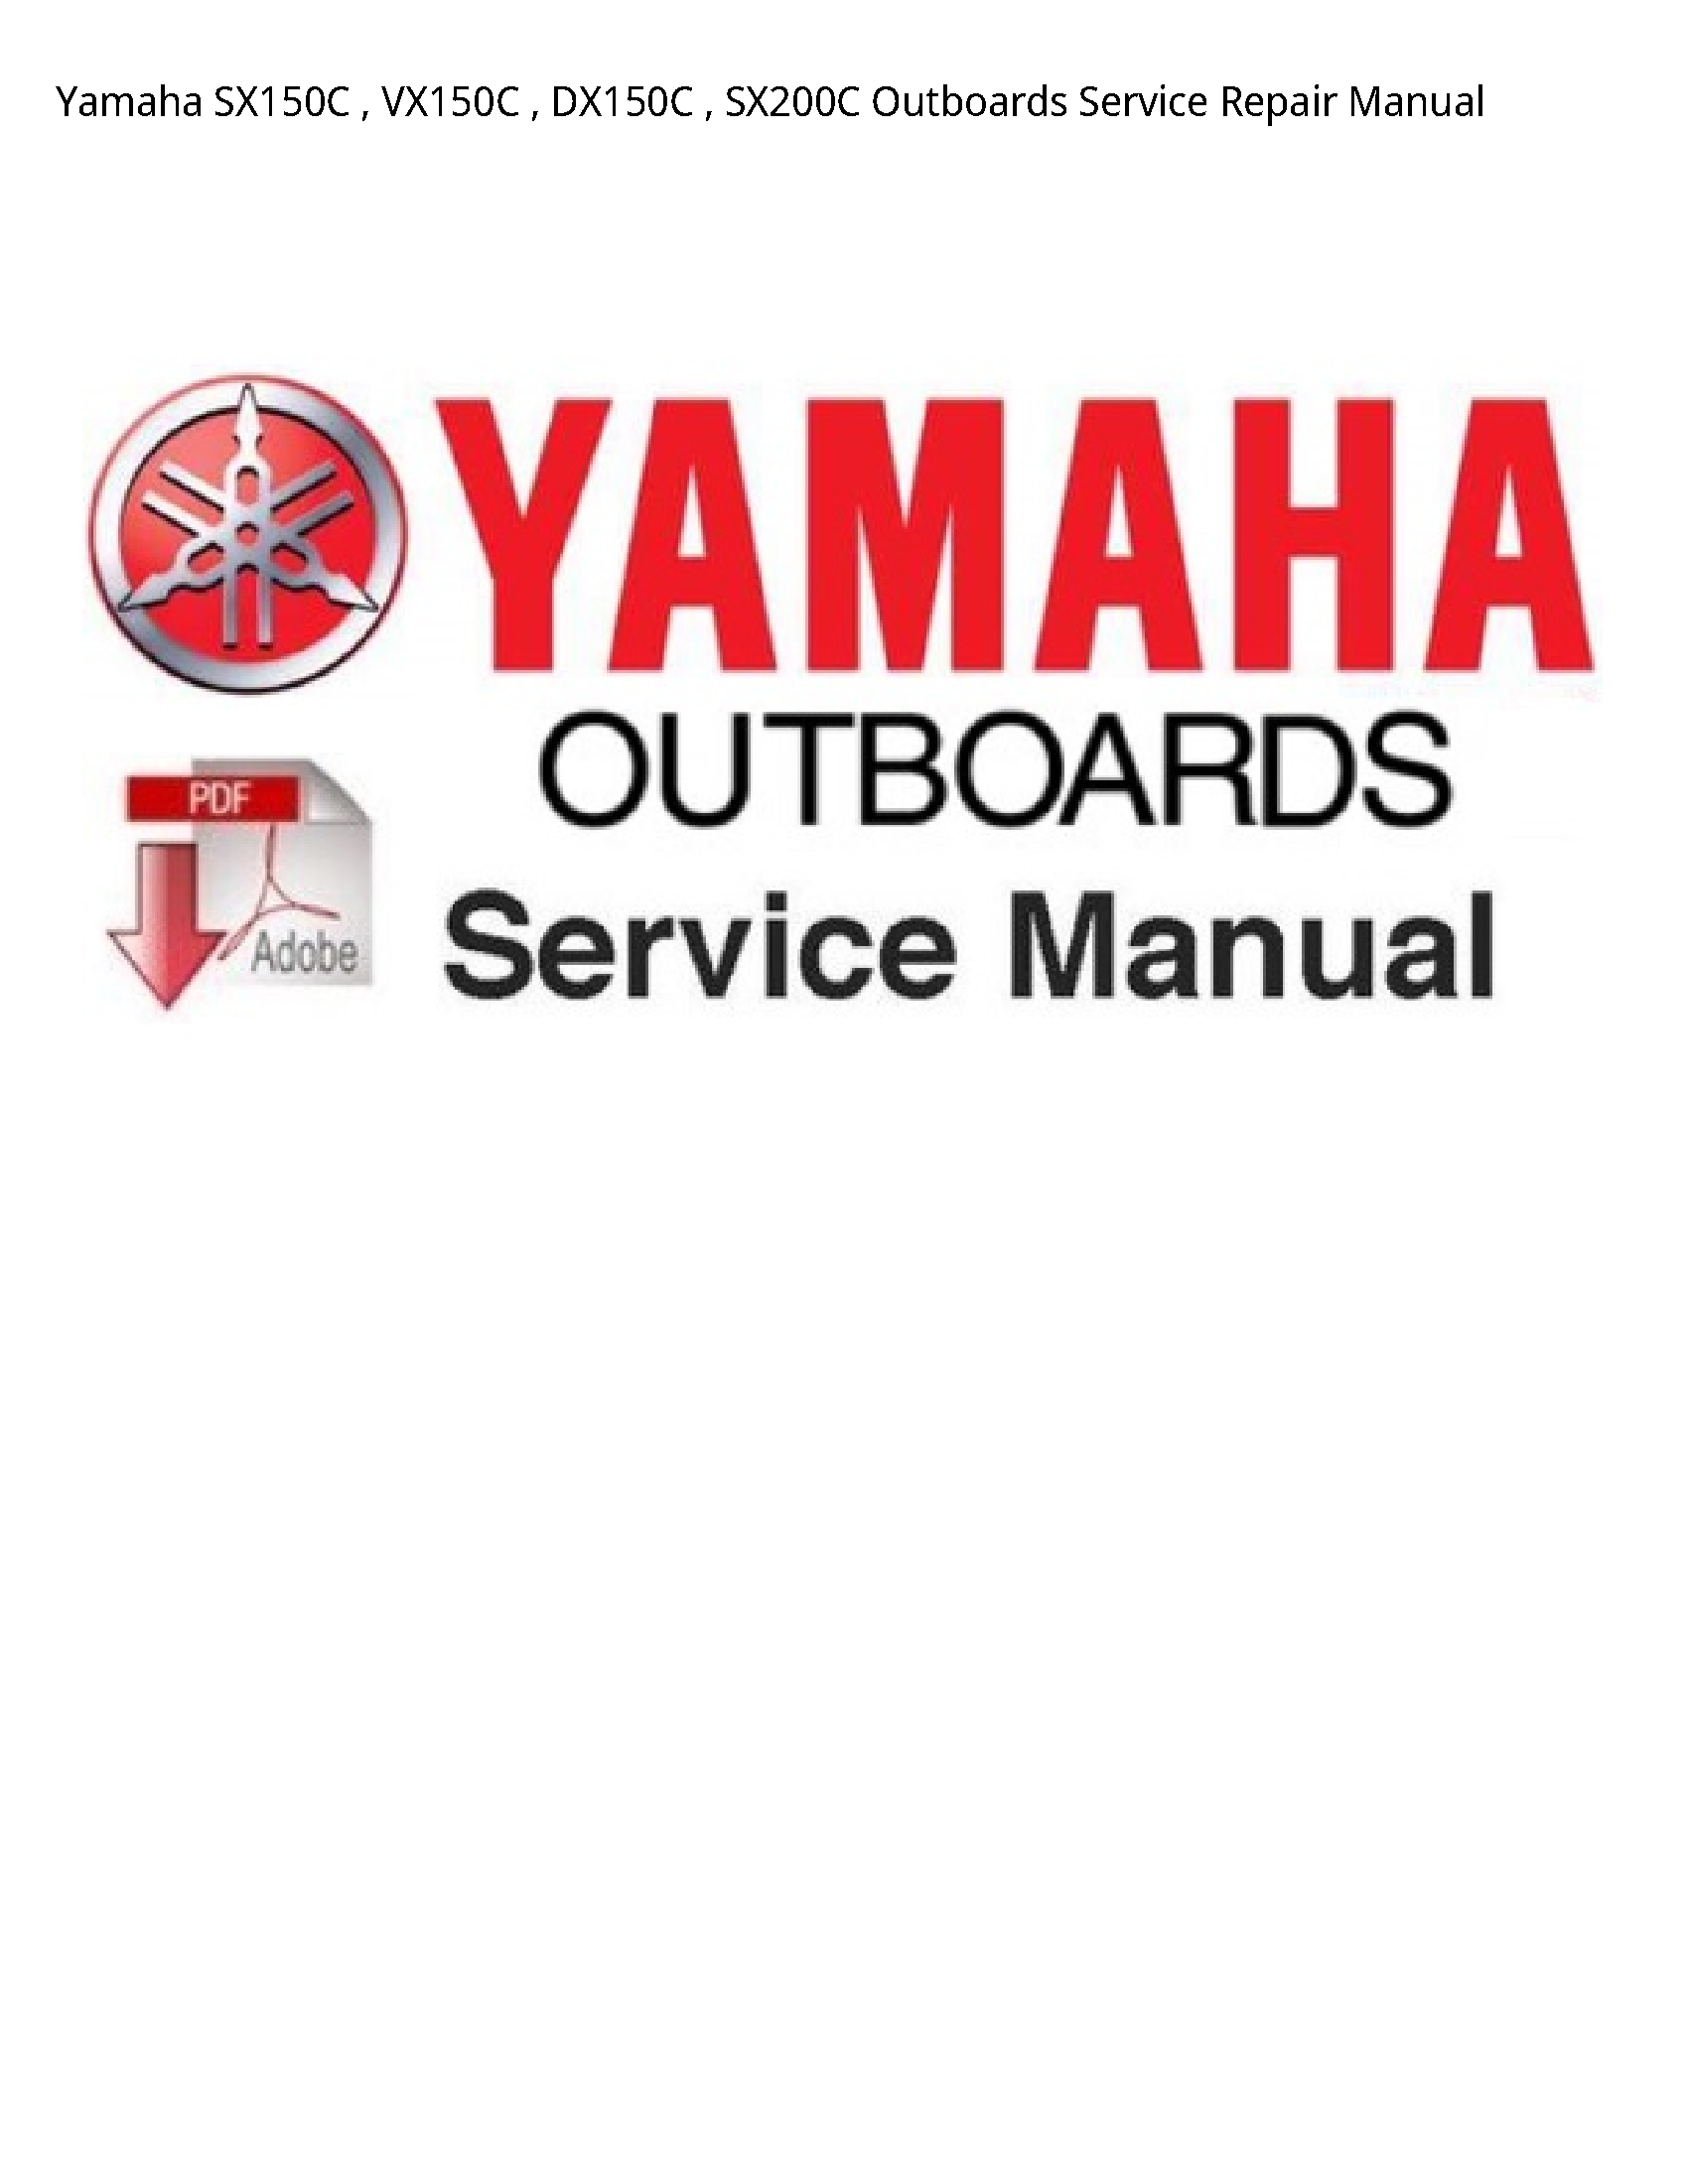 Yamaha SX150C Outboards manual